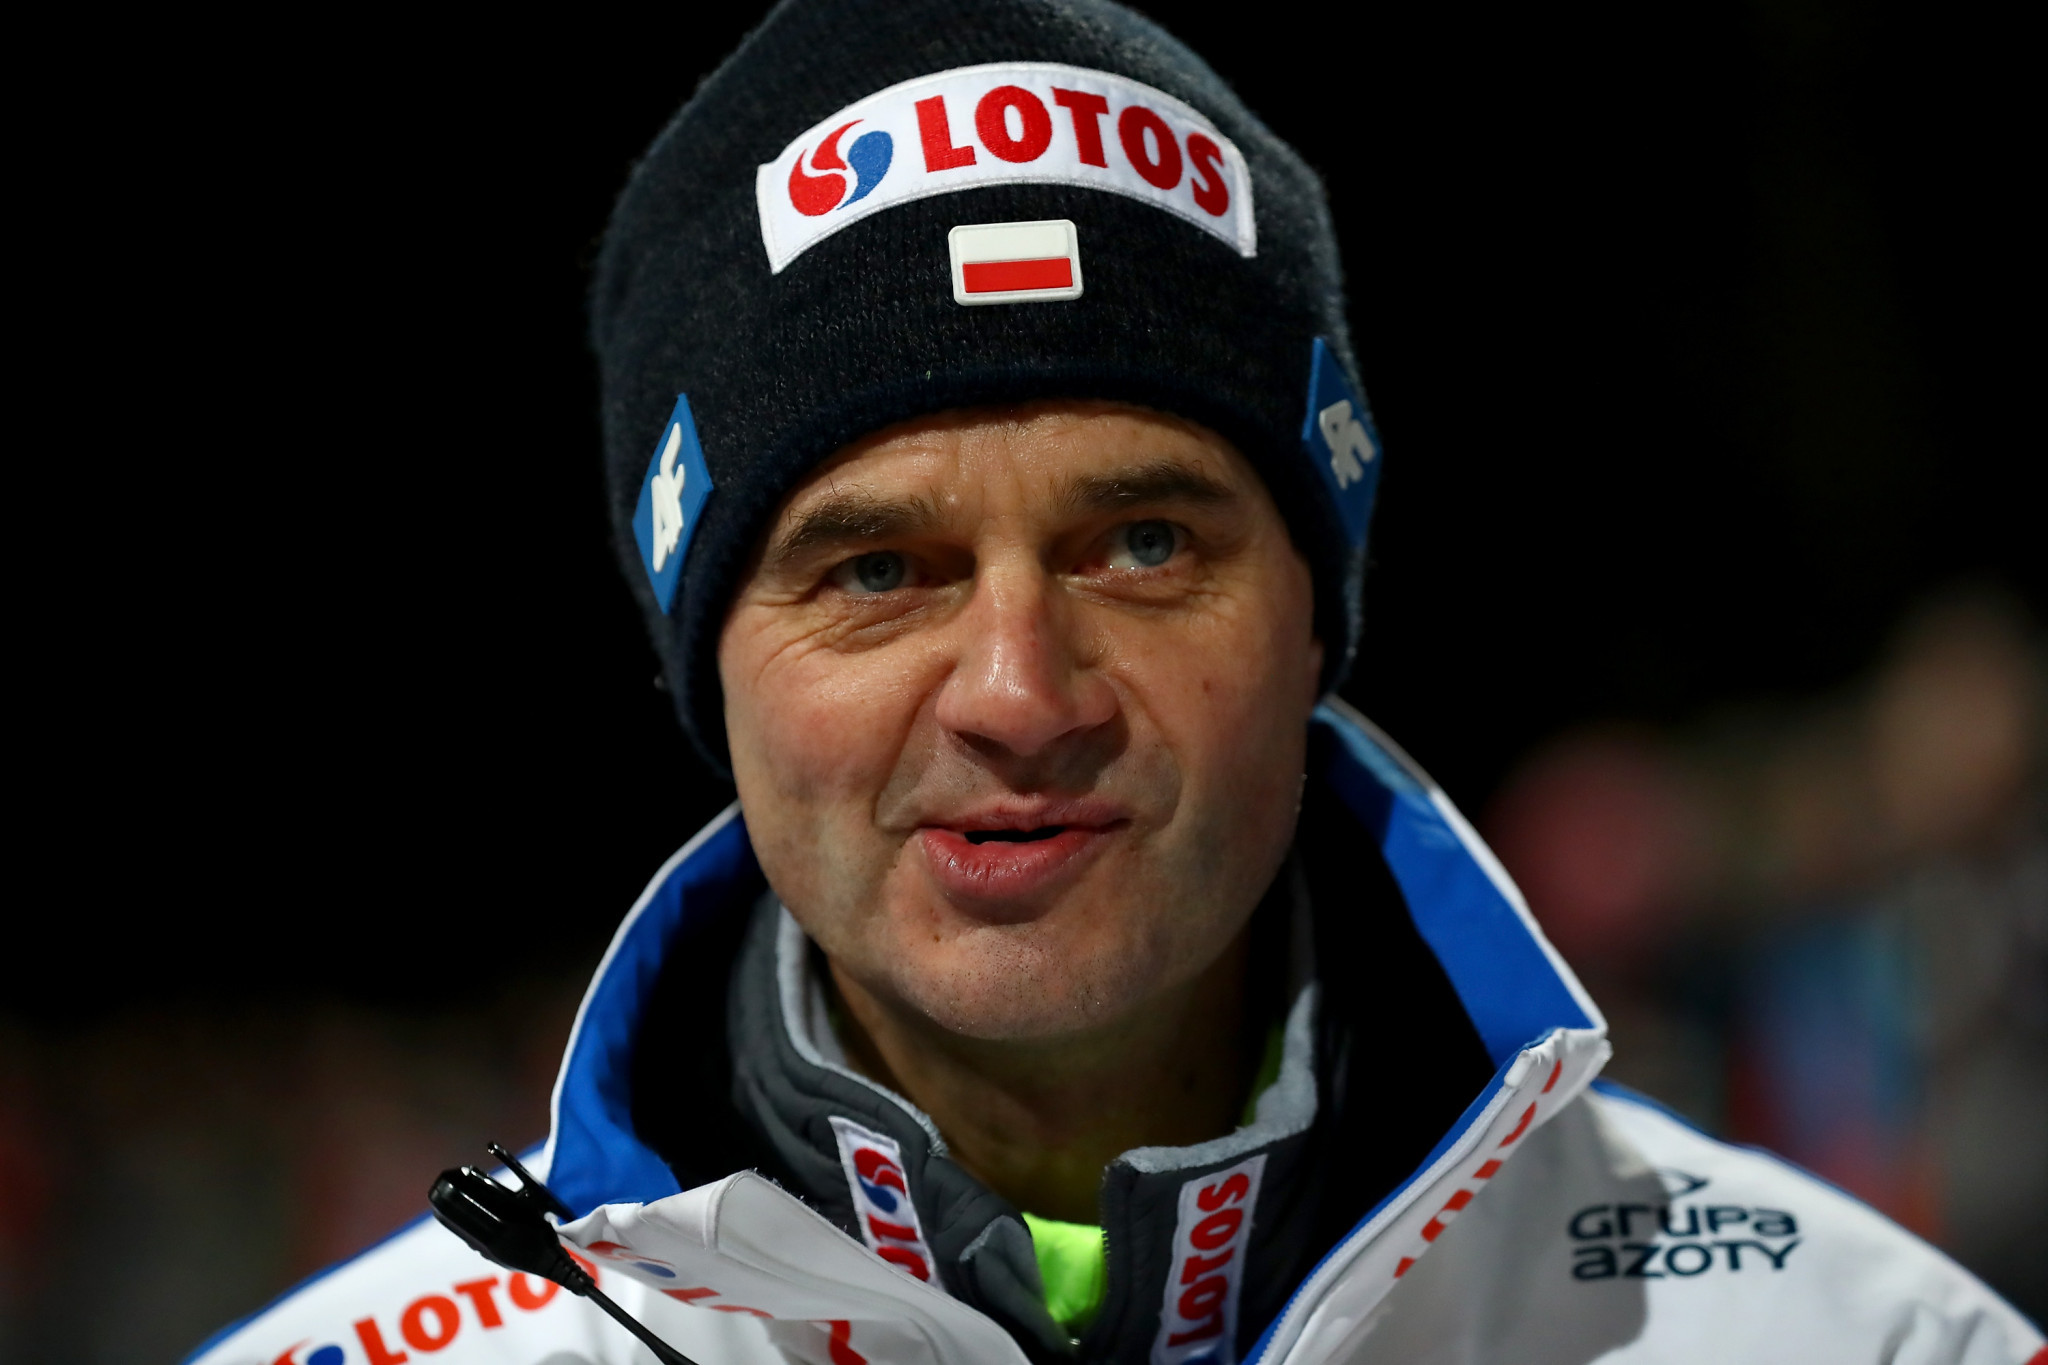 Germany name Horngacher as ski jumping head coach